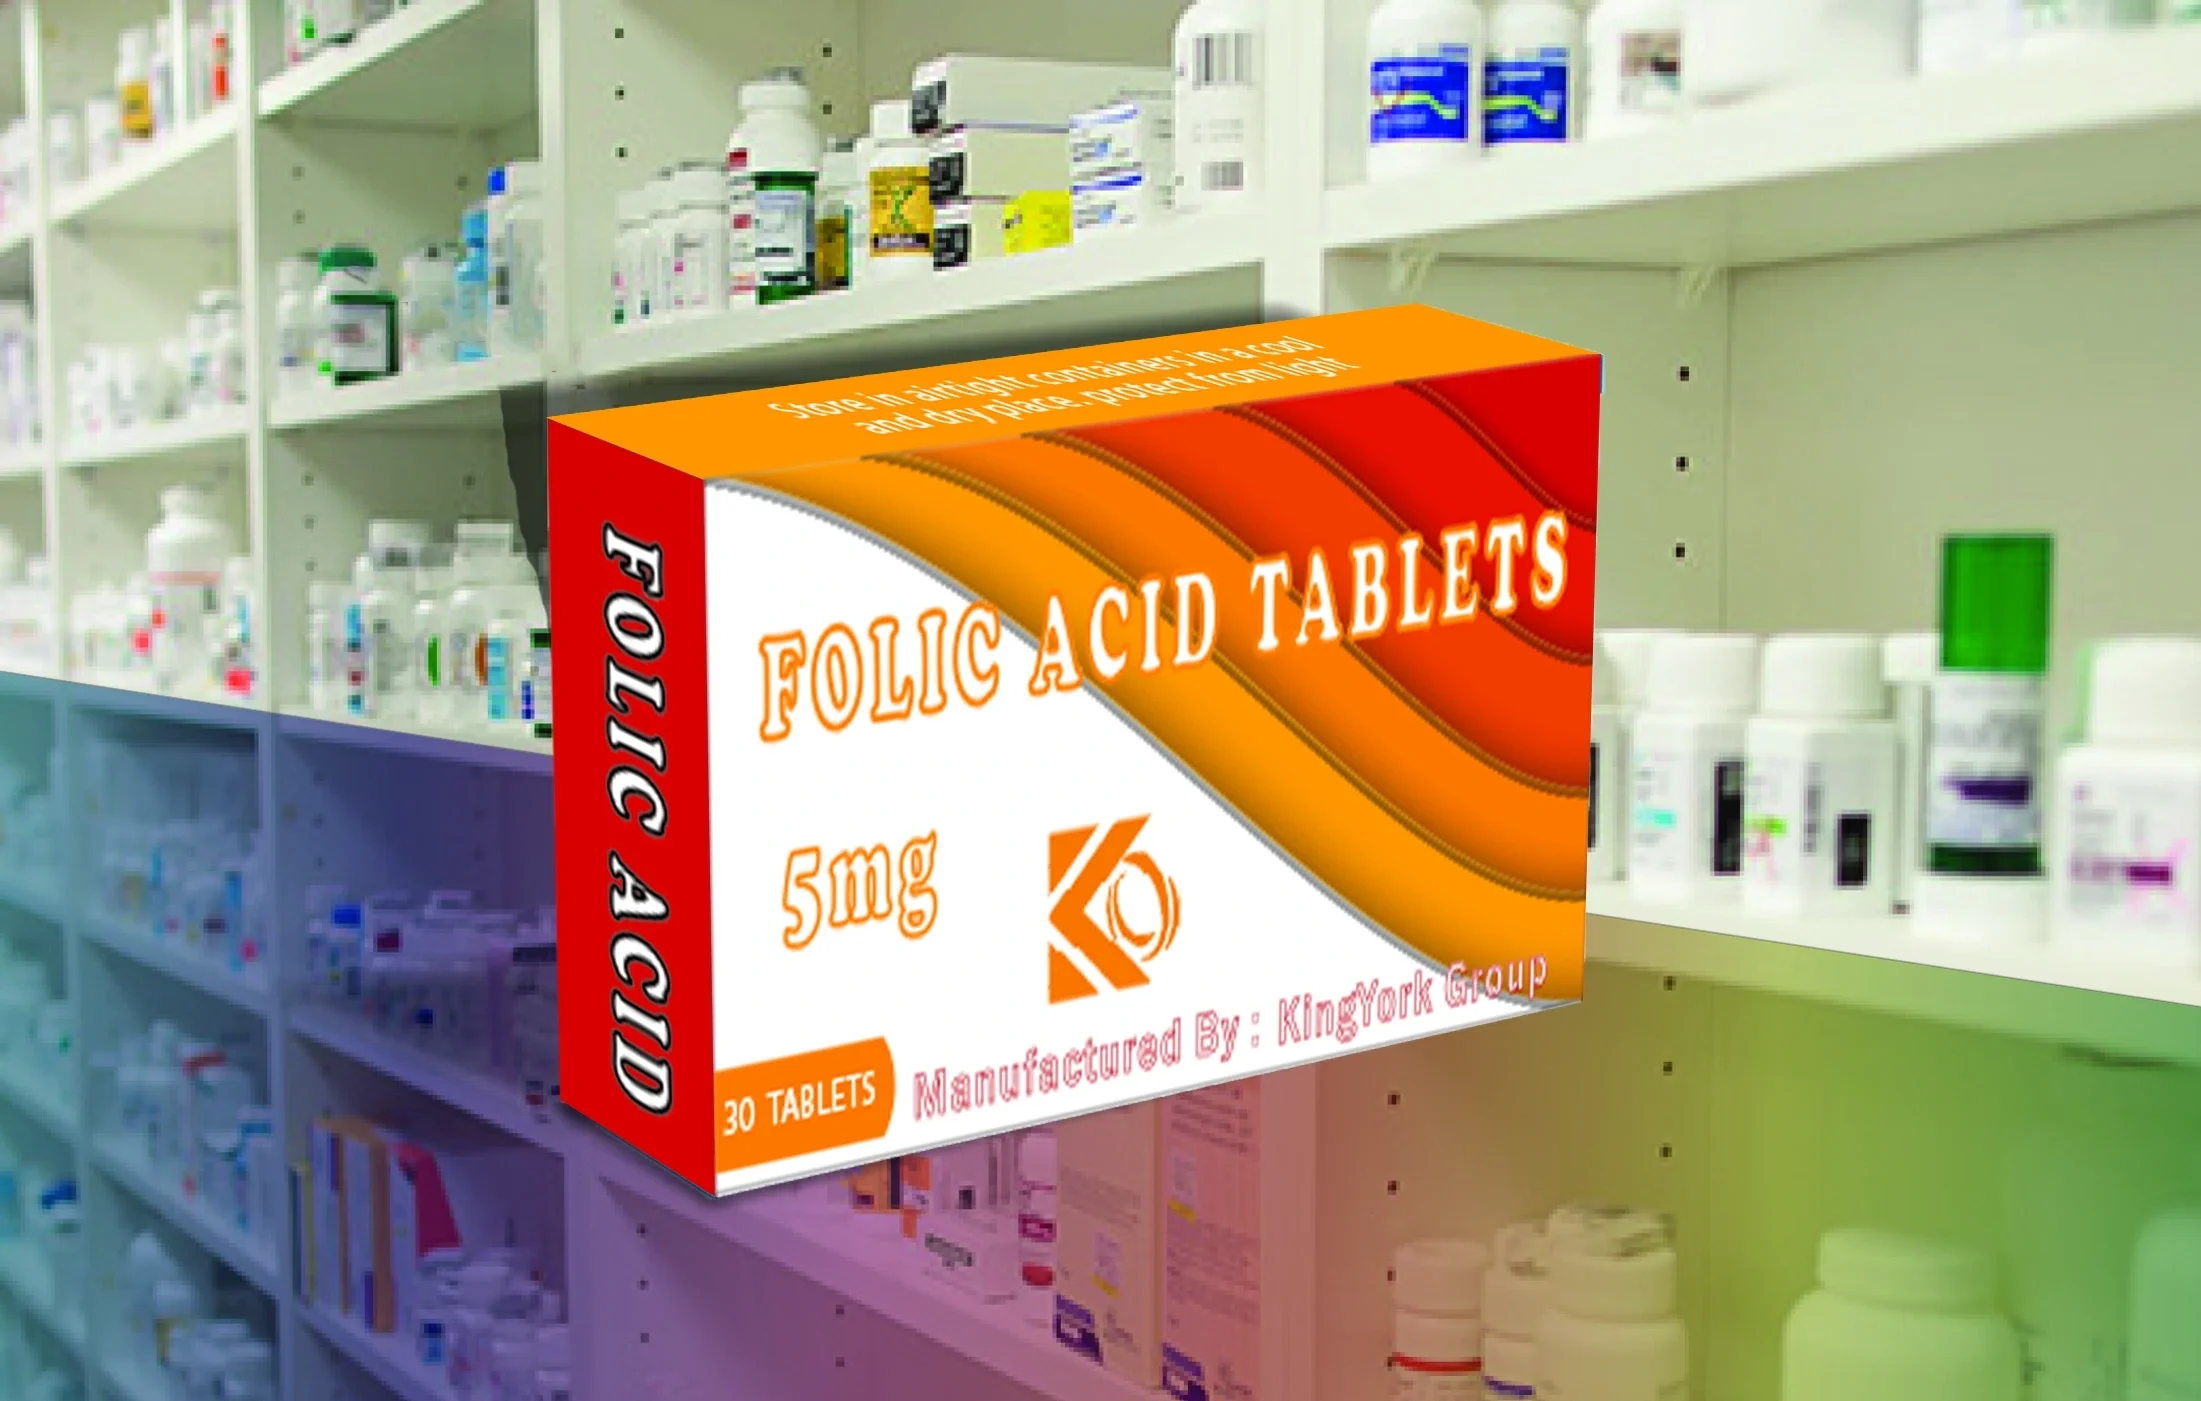 'Folic acid tablets', ' Folic acid 50mg tablets', 'anemia treatment tablets', 'rise blood'